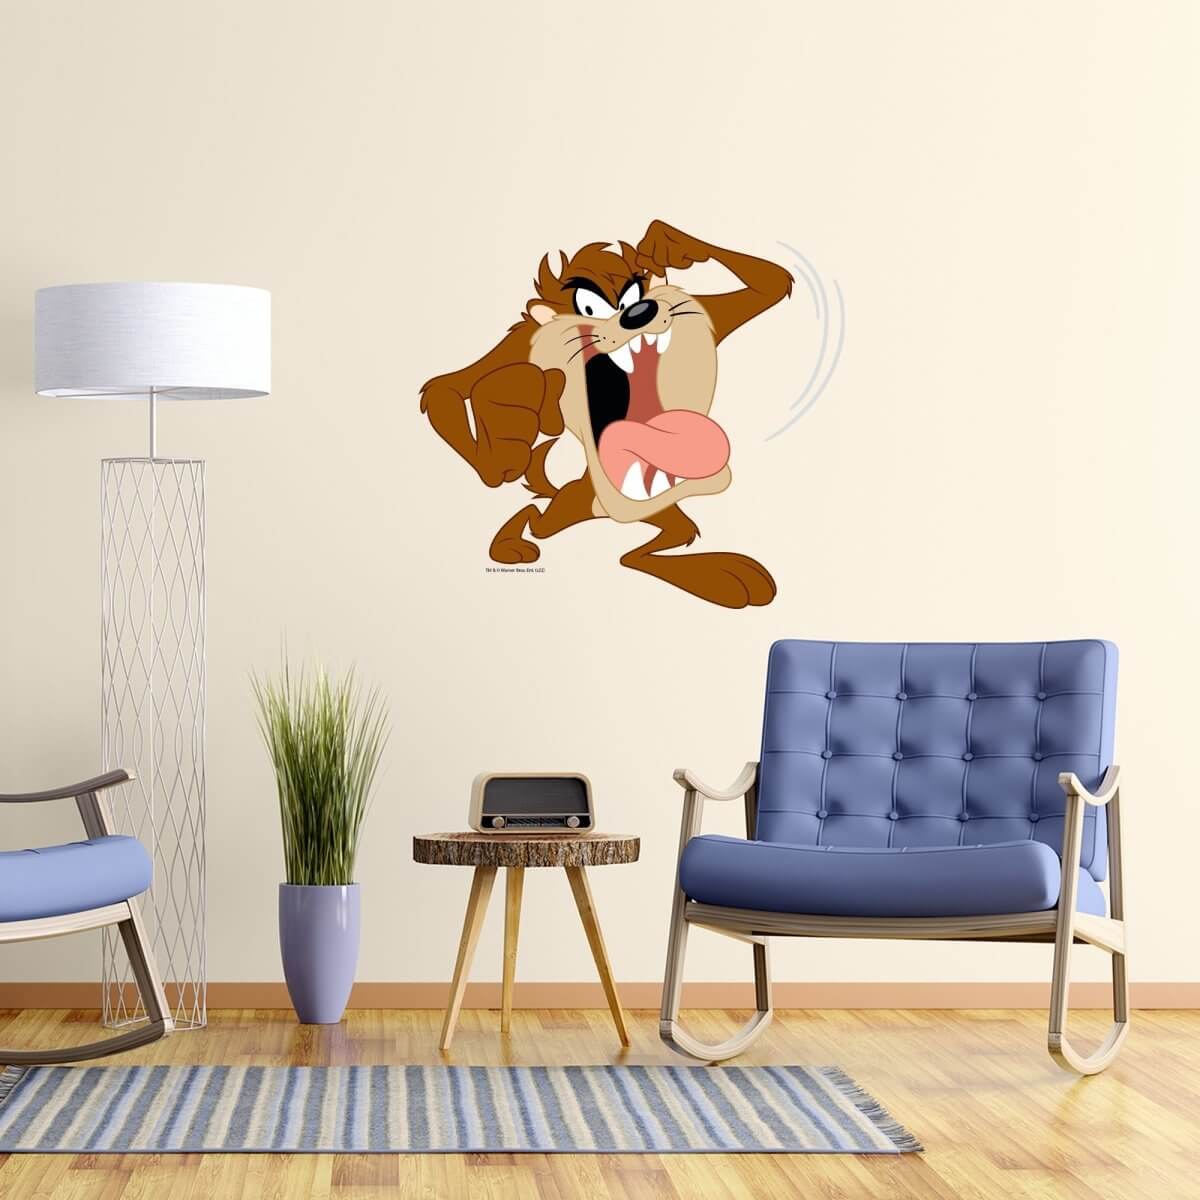 Kismet Decals Looney Tunes Tazmanian Devil Licensed Wall Sticker - Easy DIY Home & Kids Room Decor Wall Decal Art - Kismet Decals